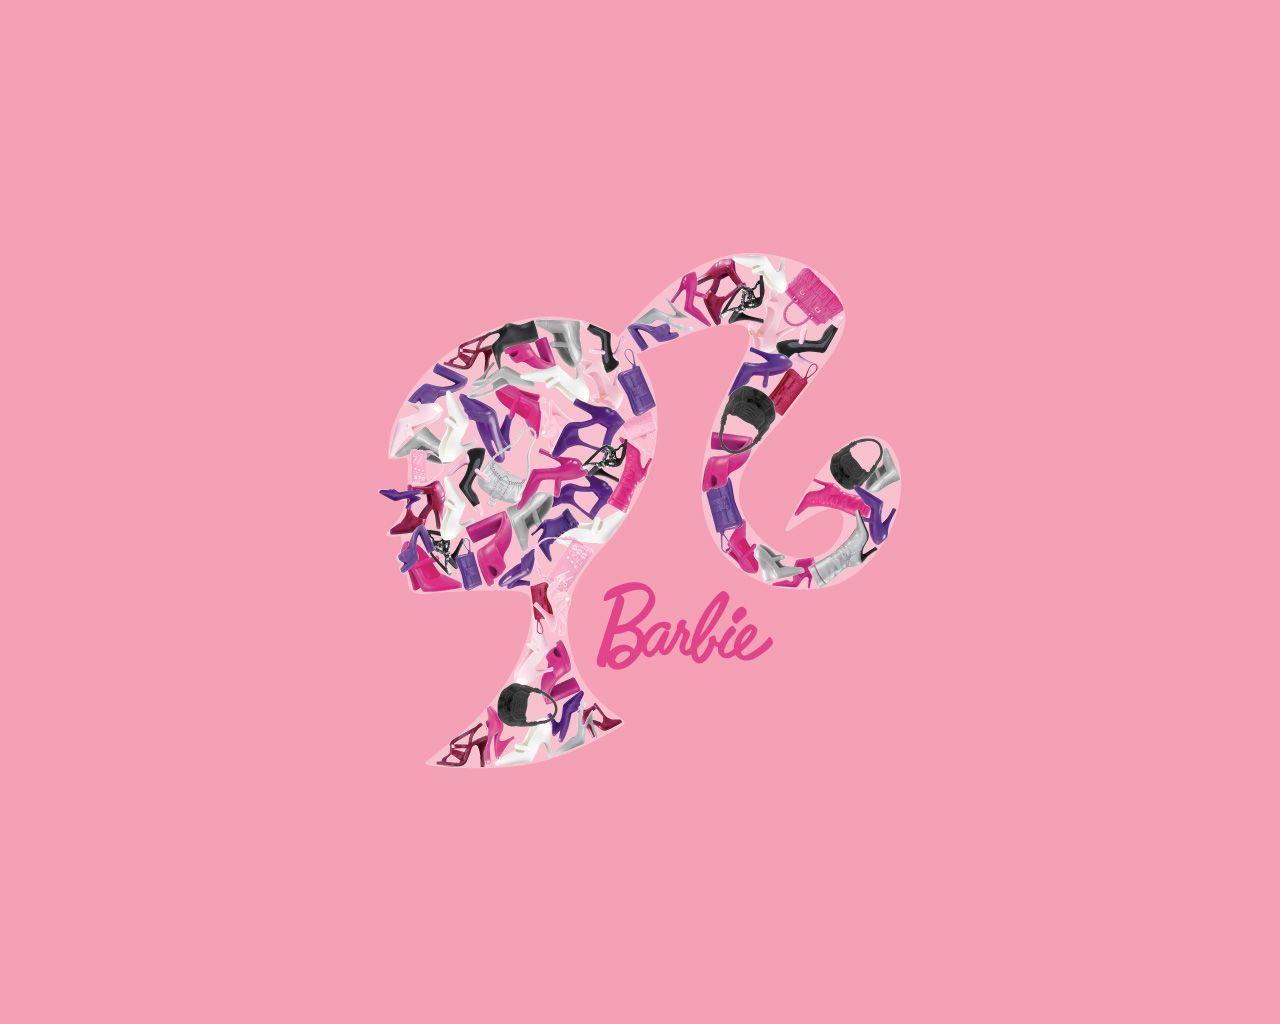 Barbie logo wallpapers